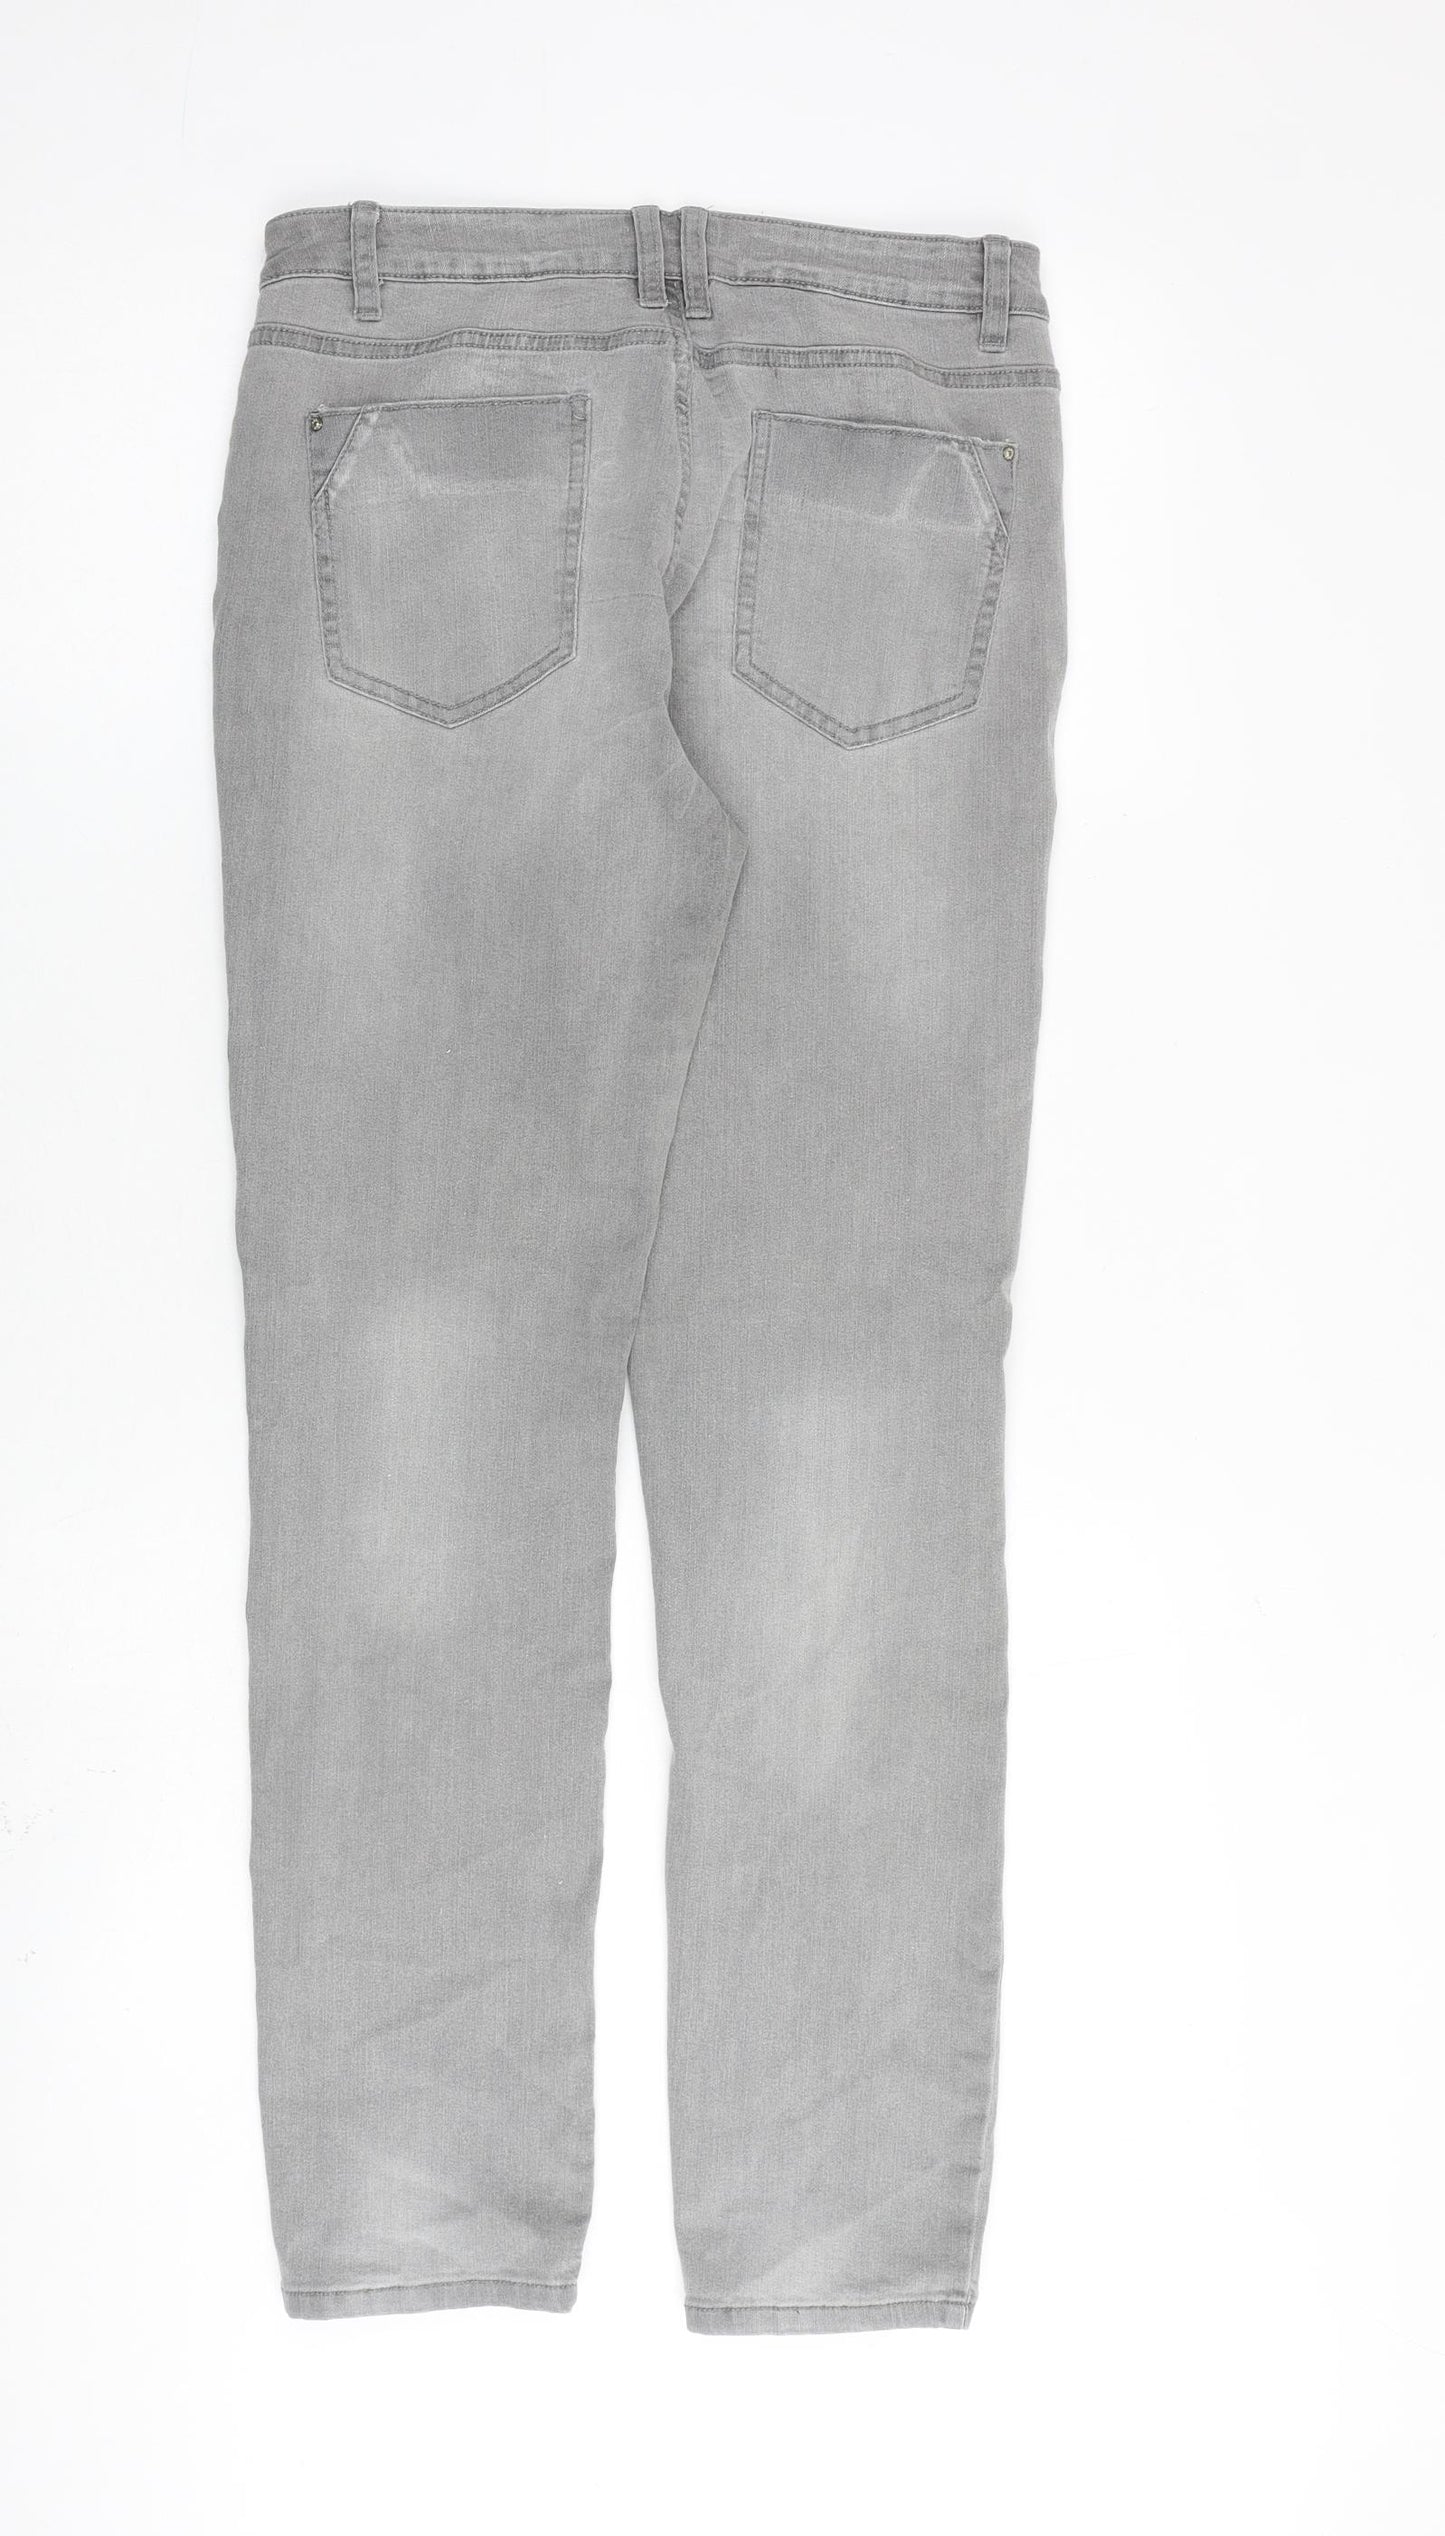 Denim & Co. Womens Grey Cotton Straight Jeans Size 8 L29 in Regular Zip